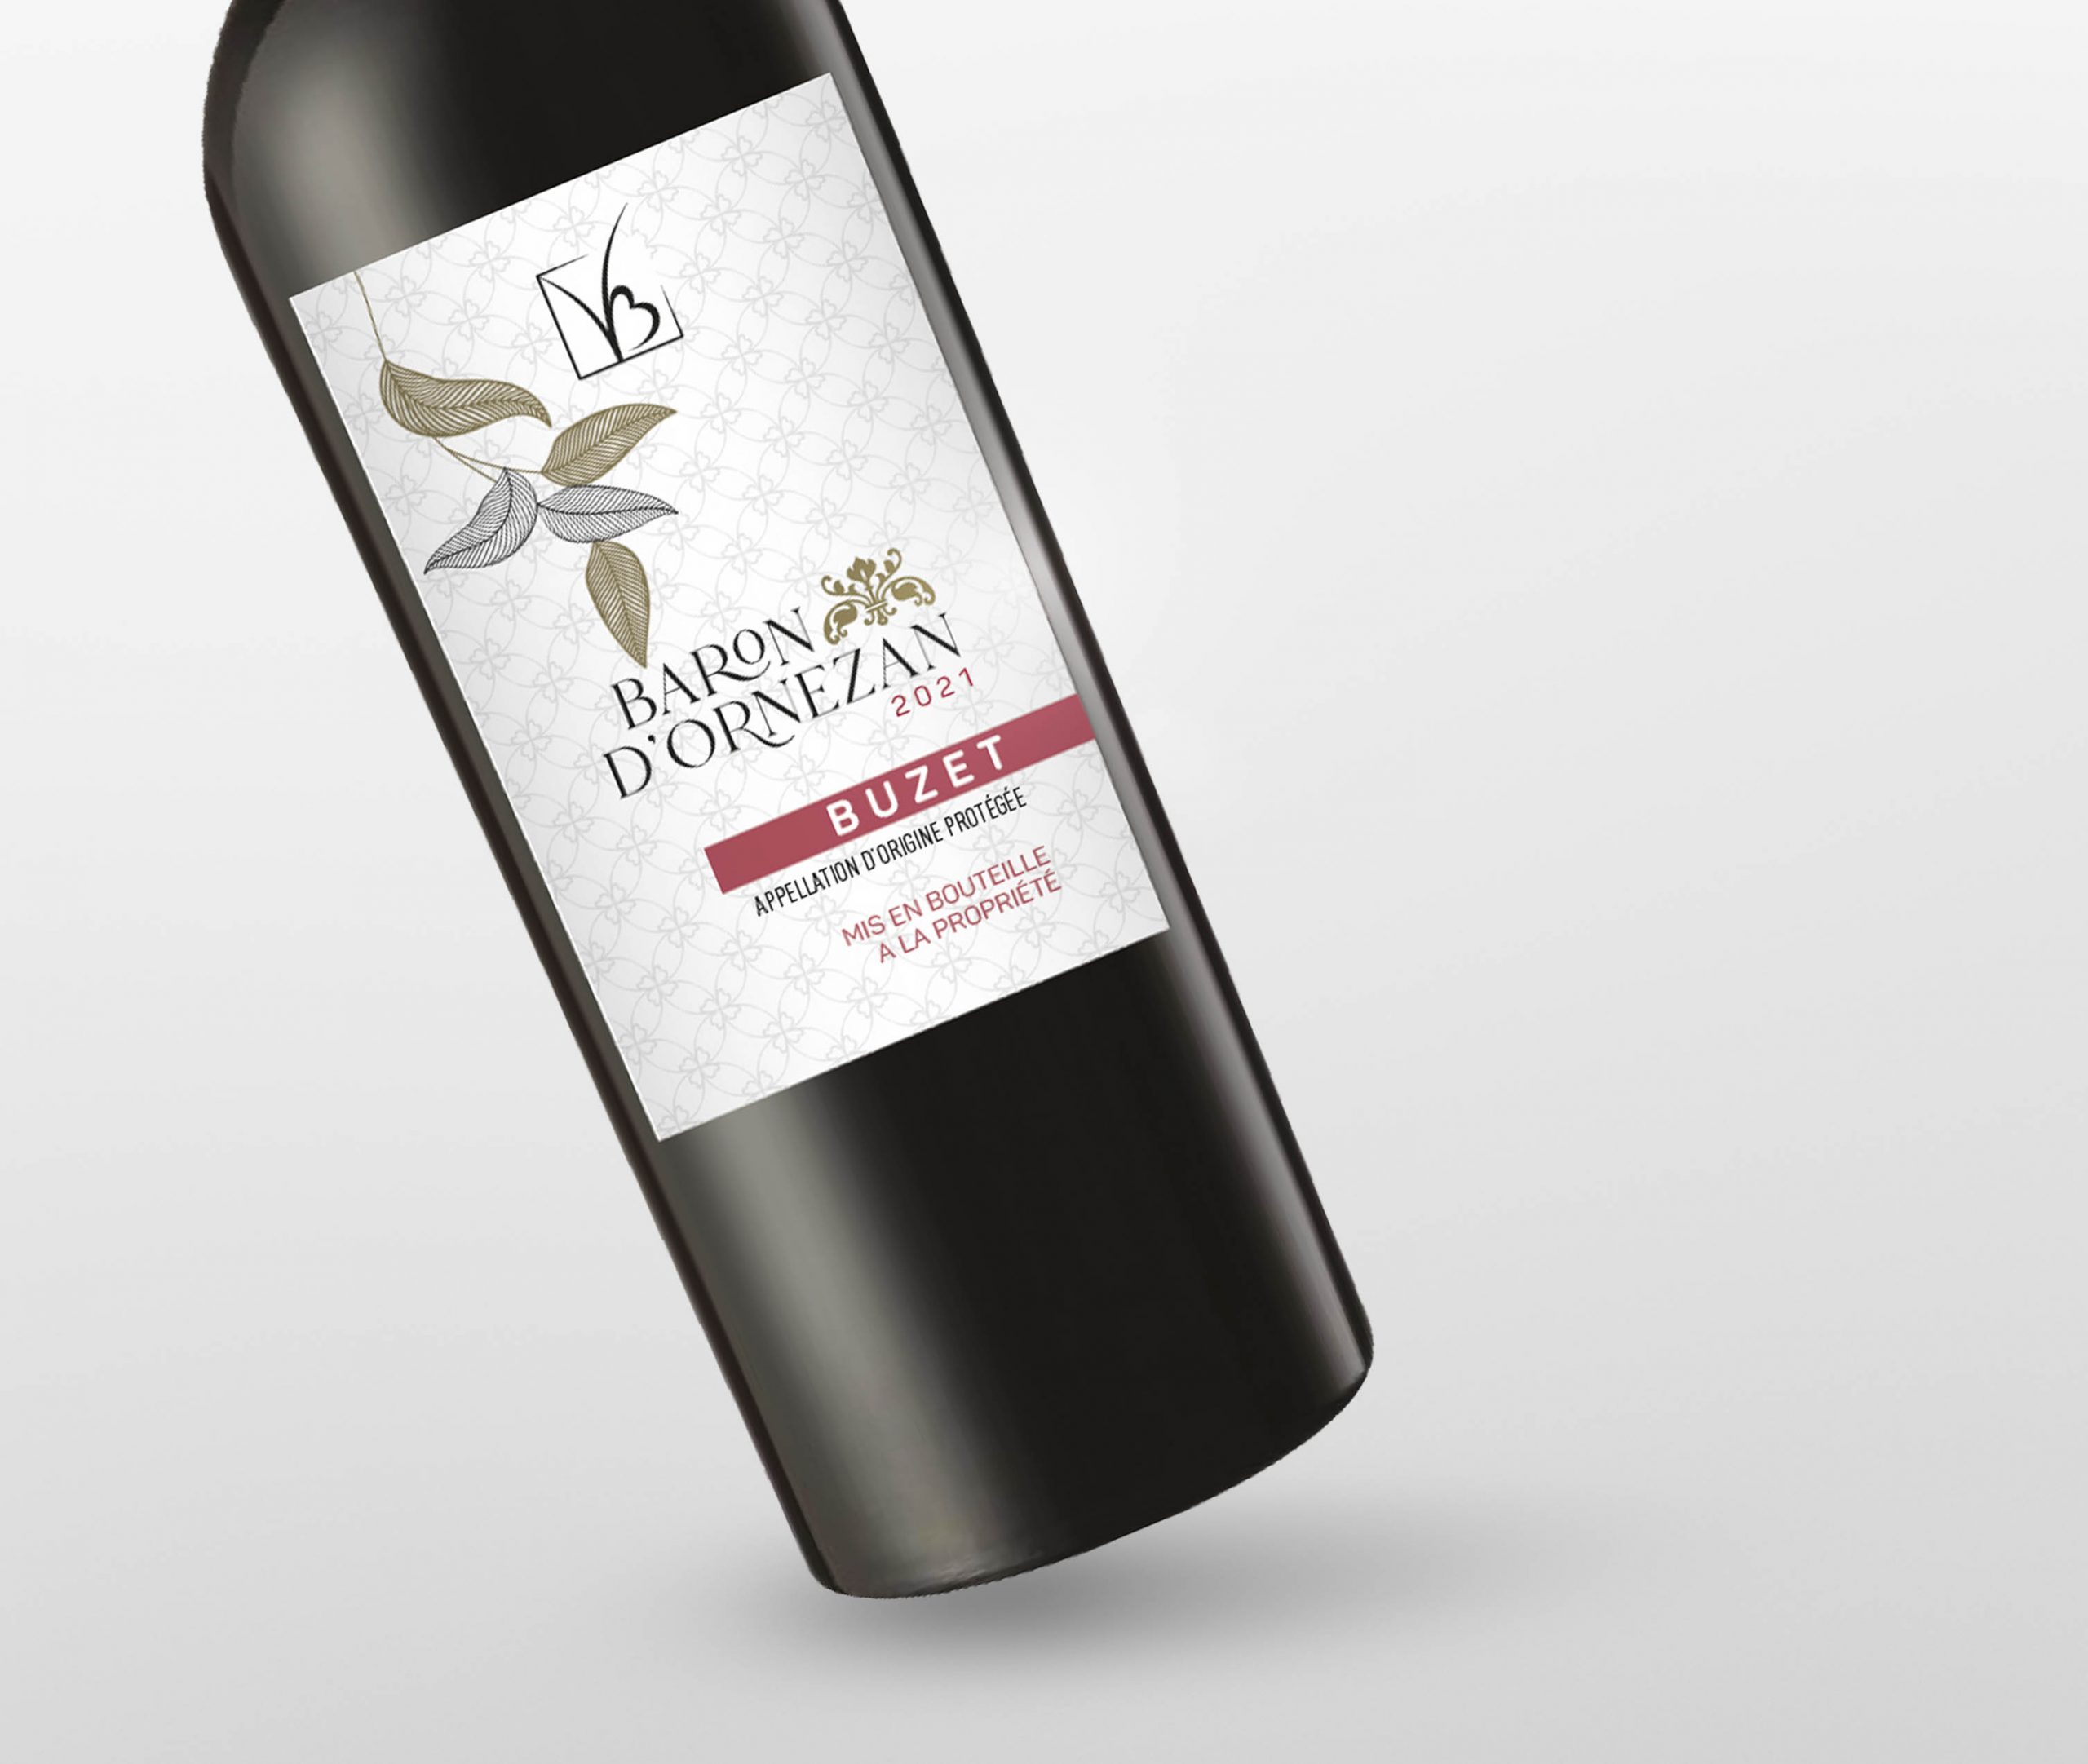 Wine label Baron d'Ornezan